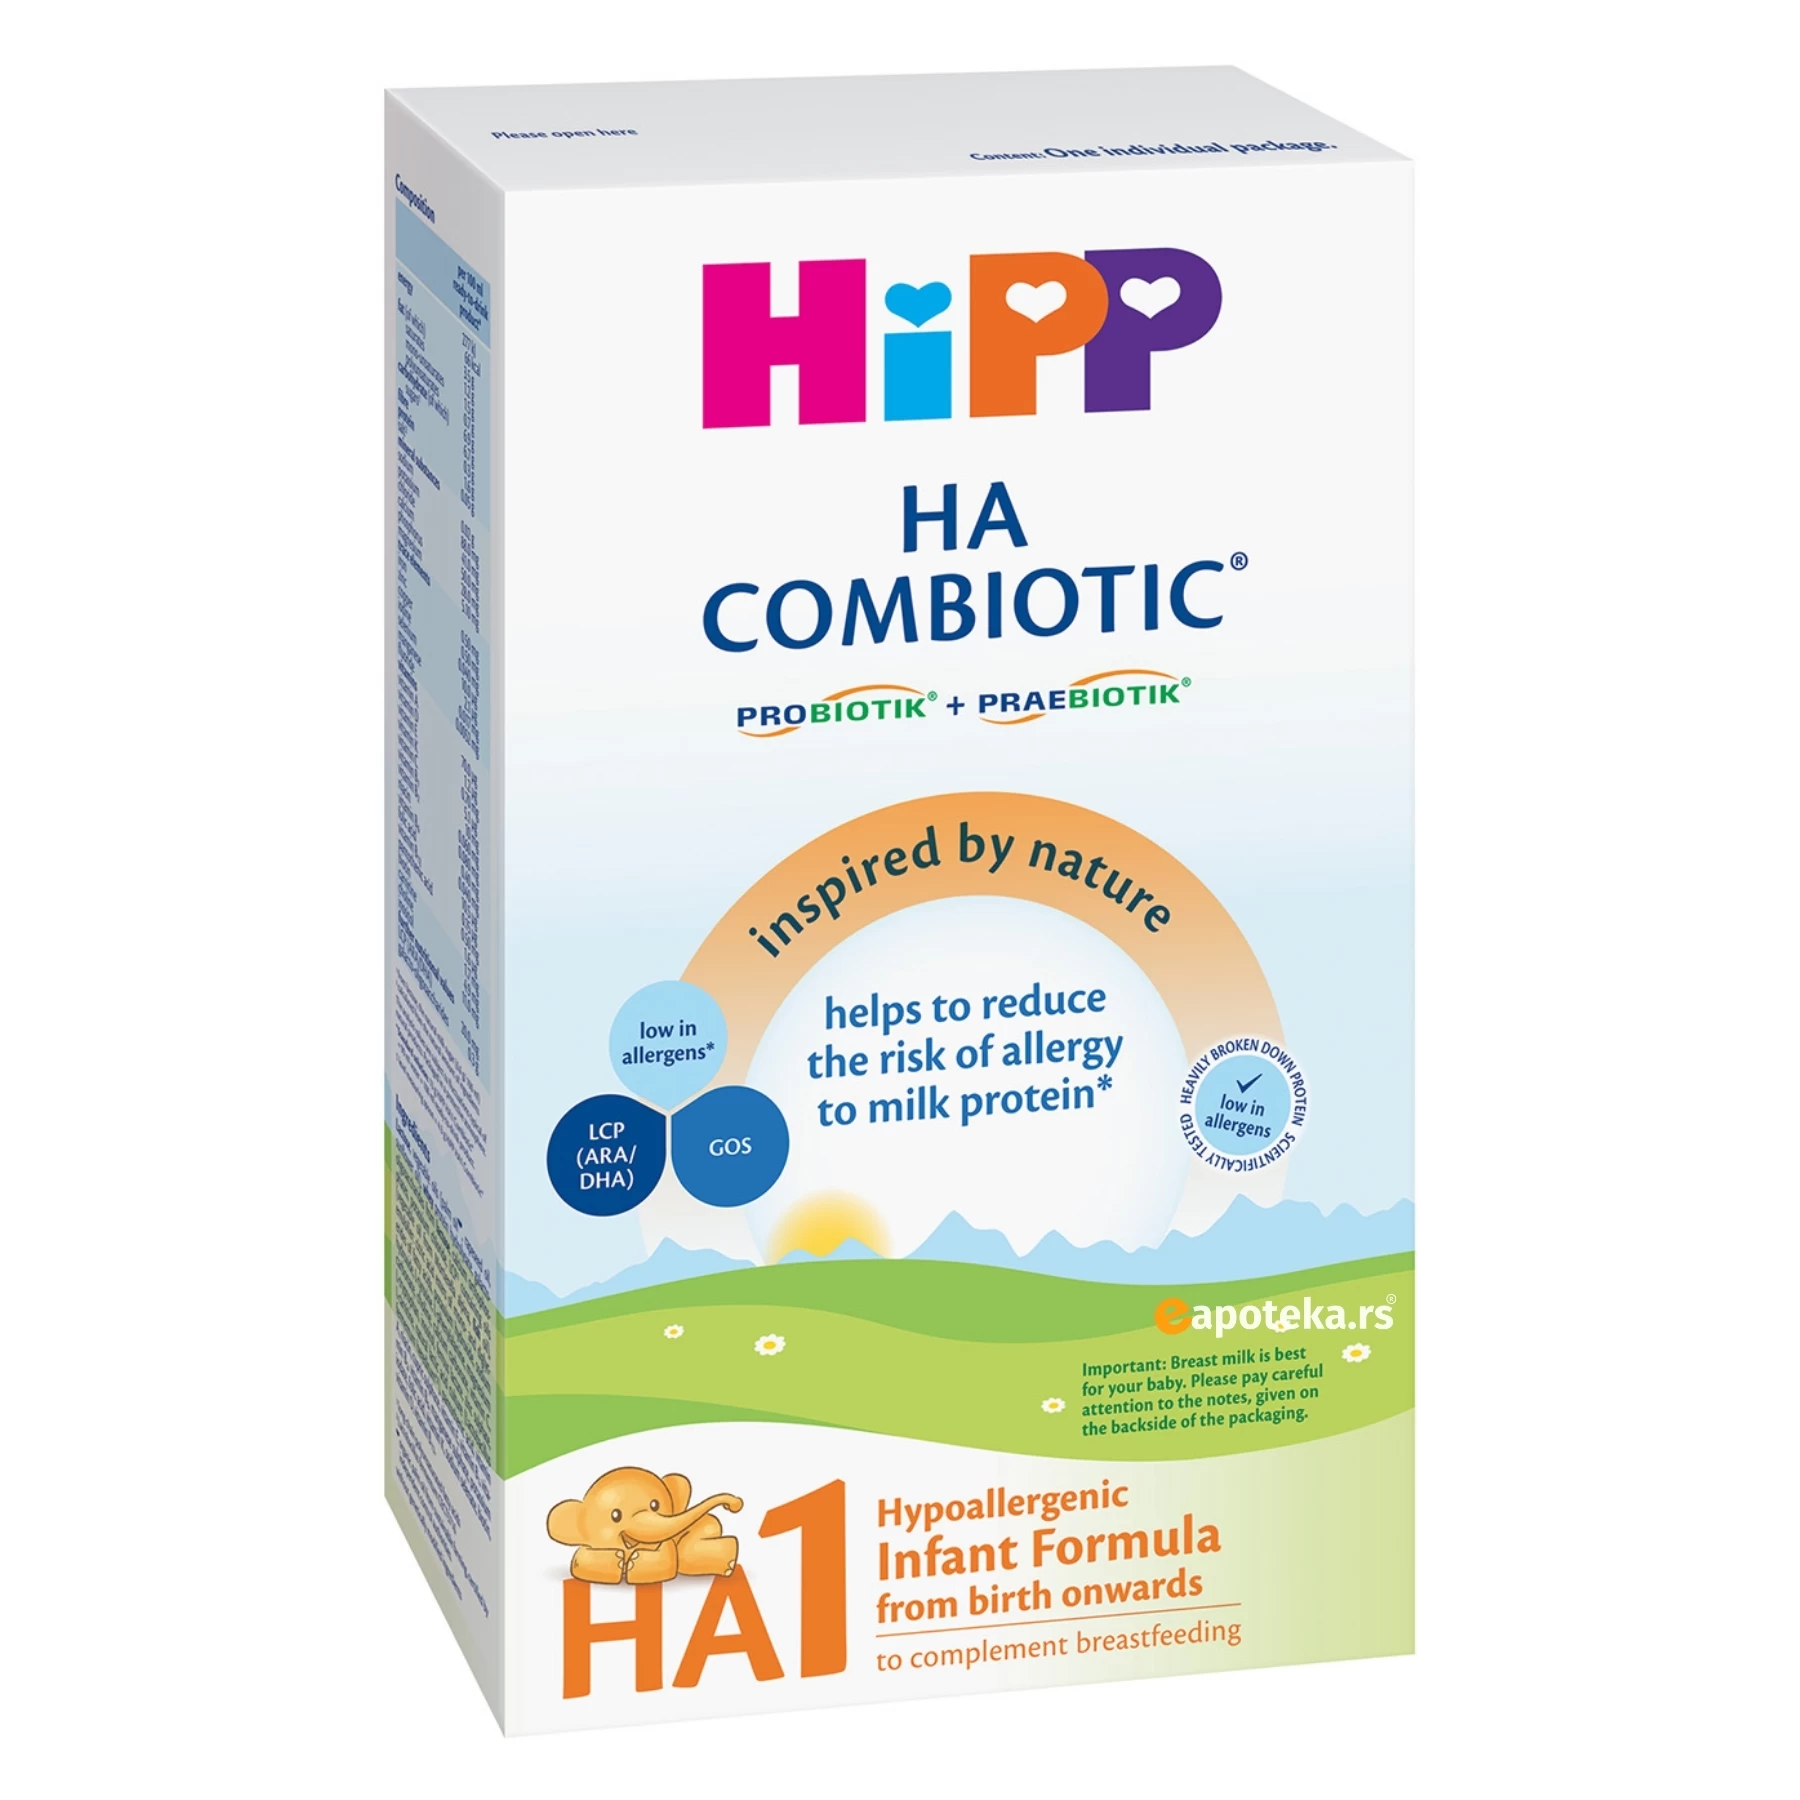 HIPP Mleko za Bebe HA 1 COMBIOTIC® 350g